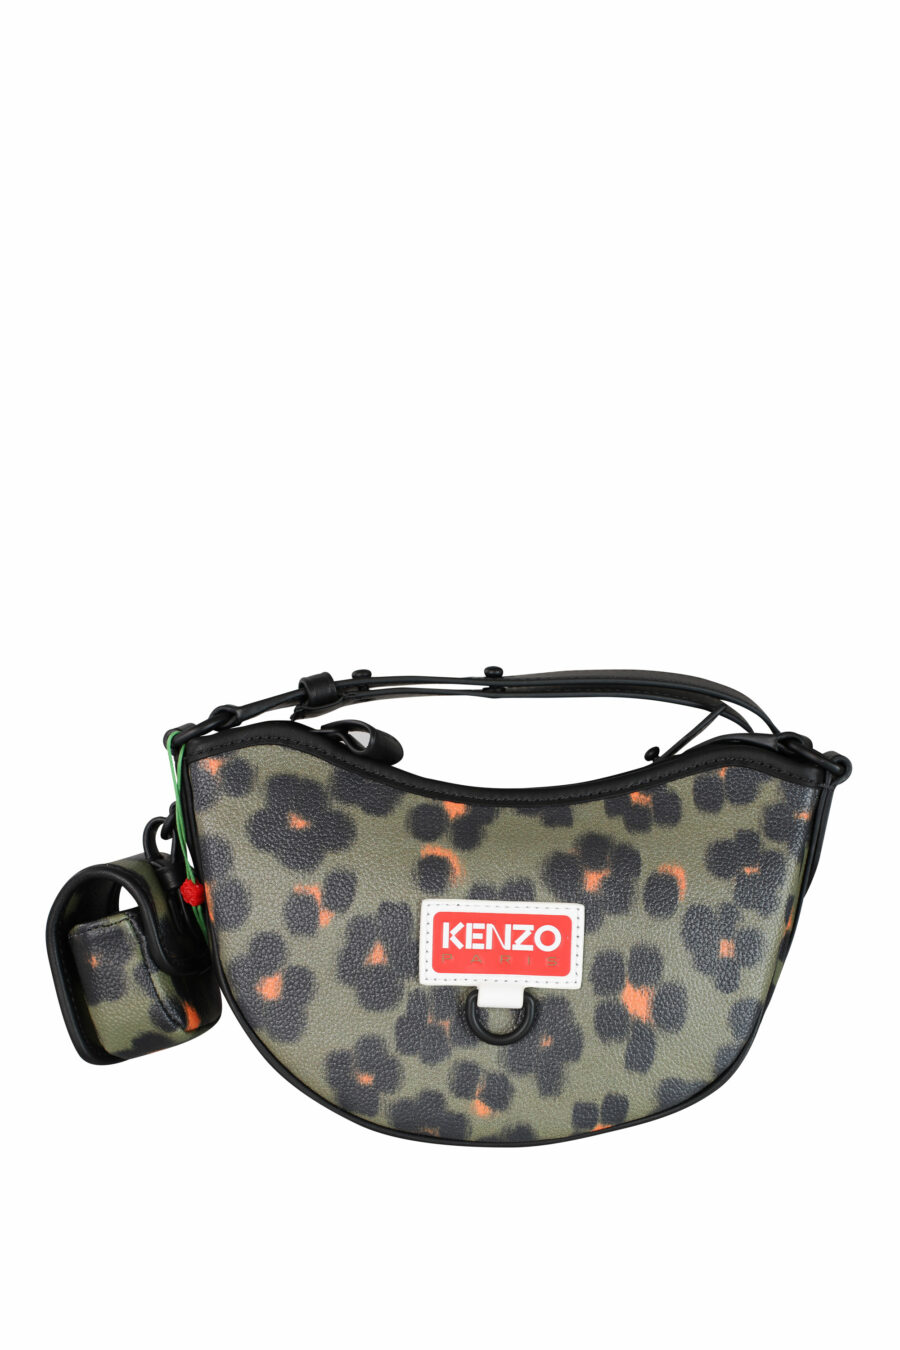 Mala de ombro com estampado de leopardo verde e laranja - IMG 3545